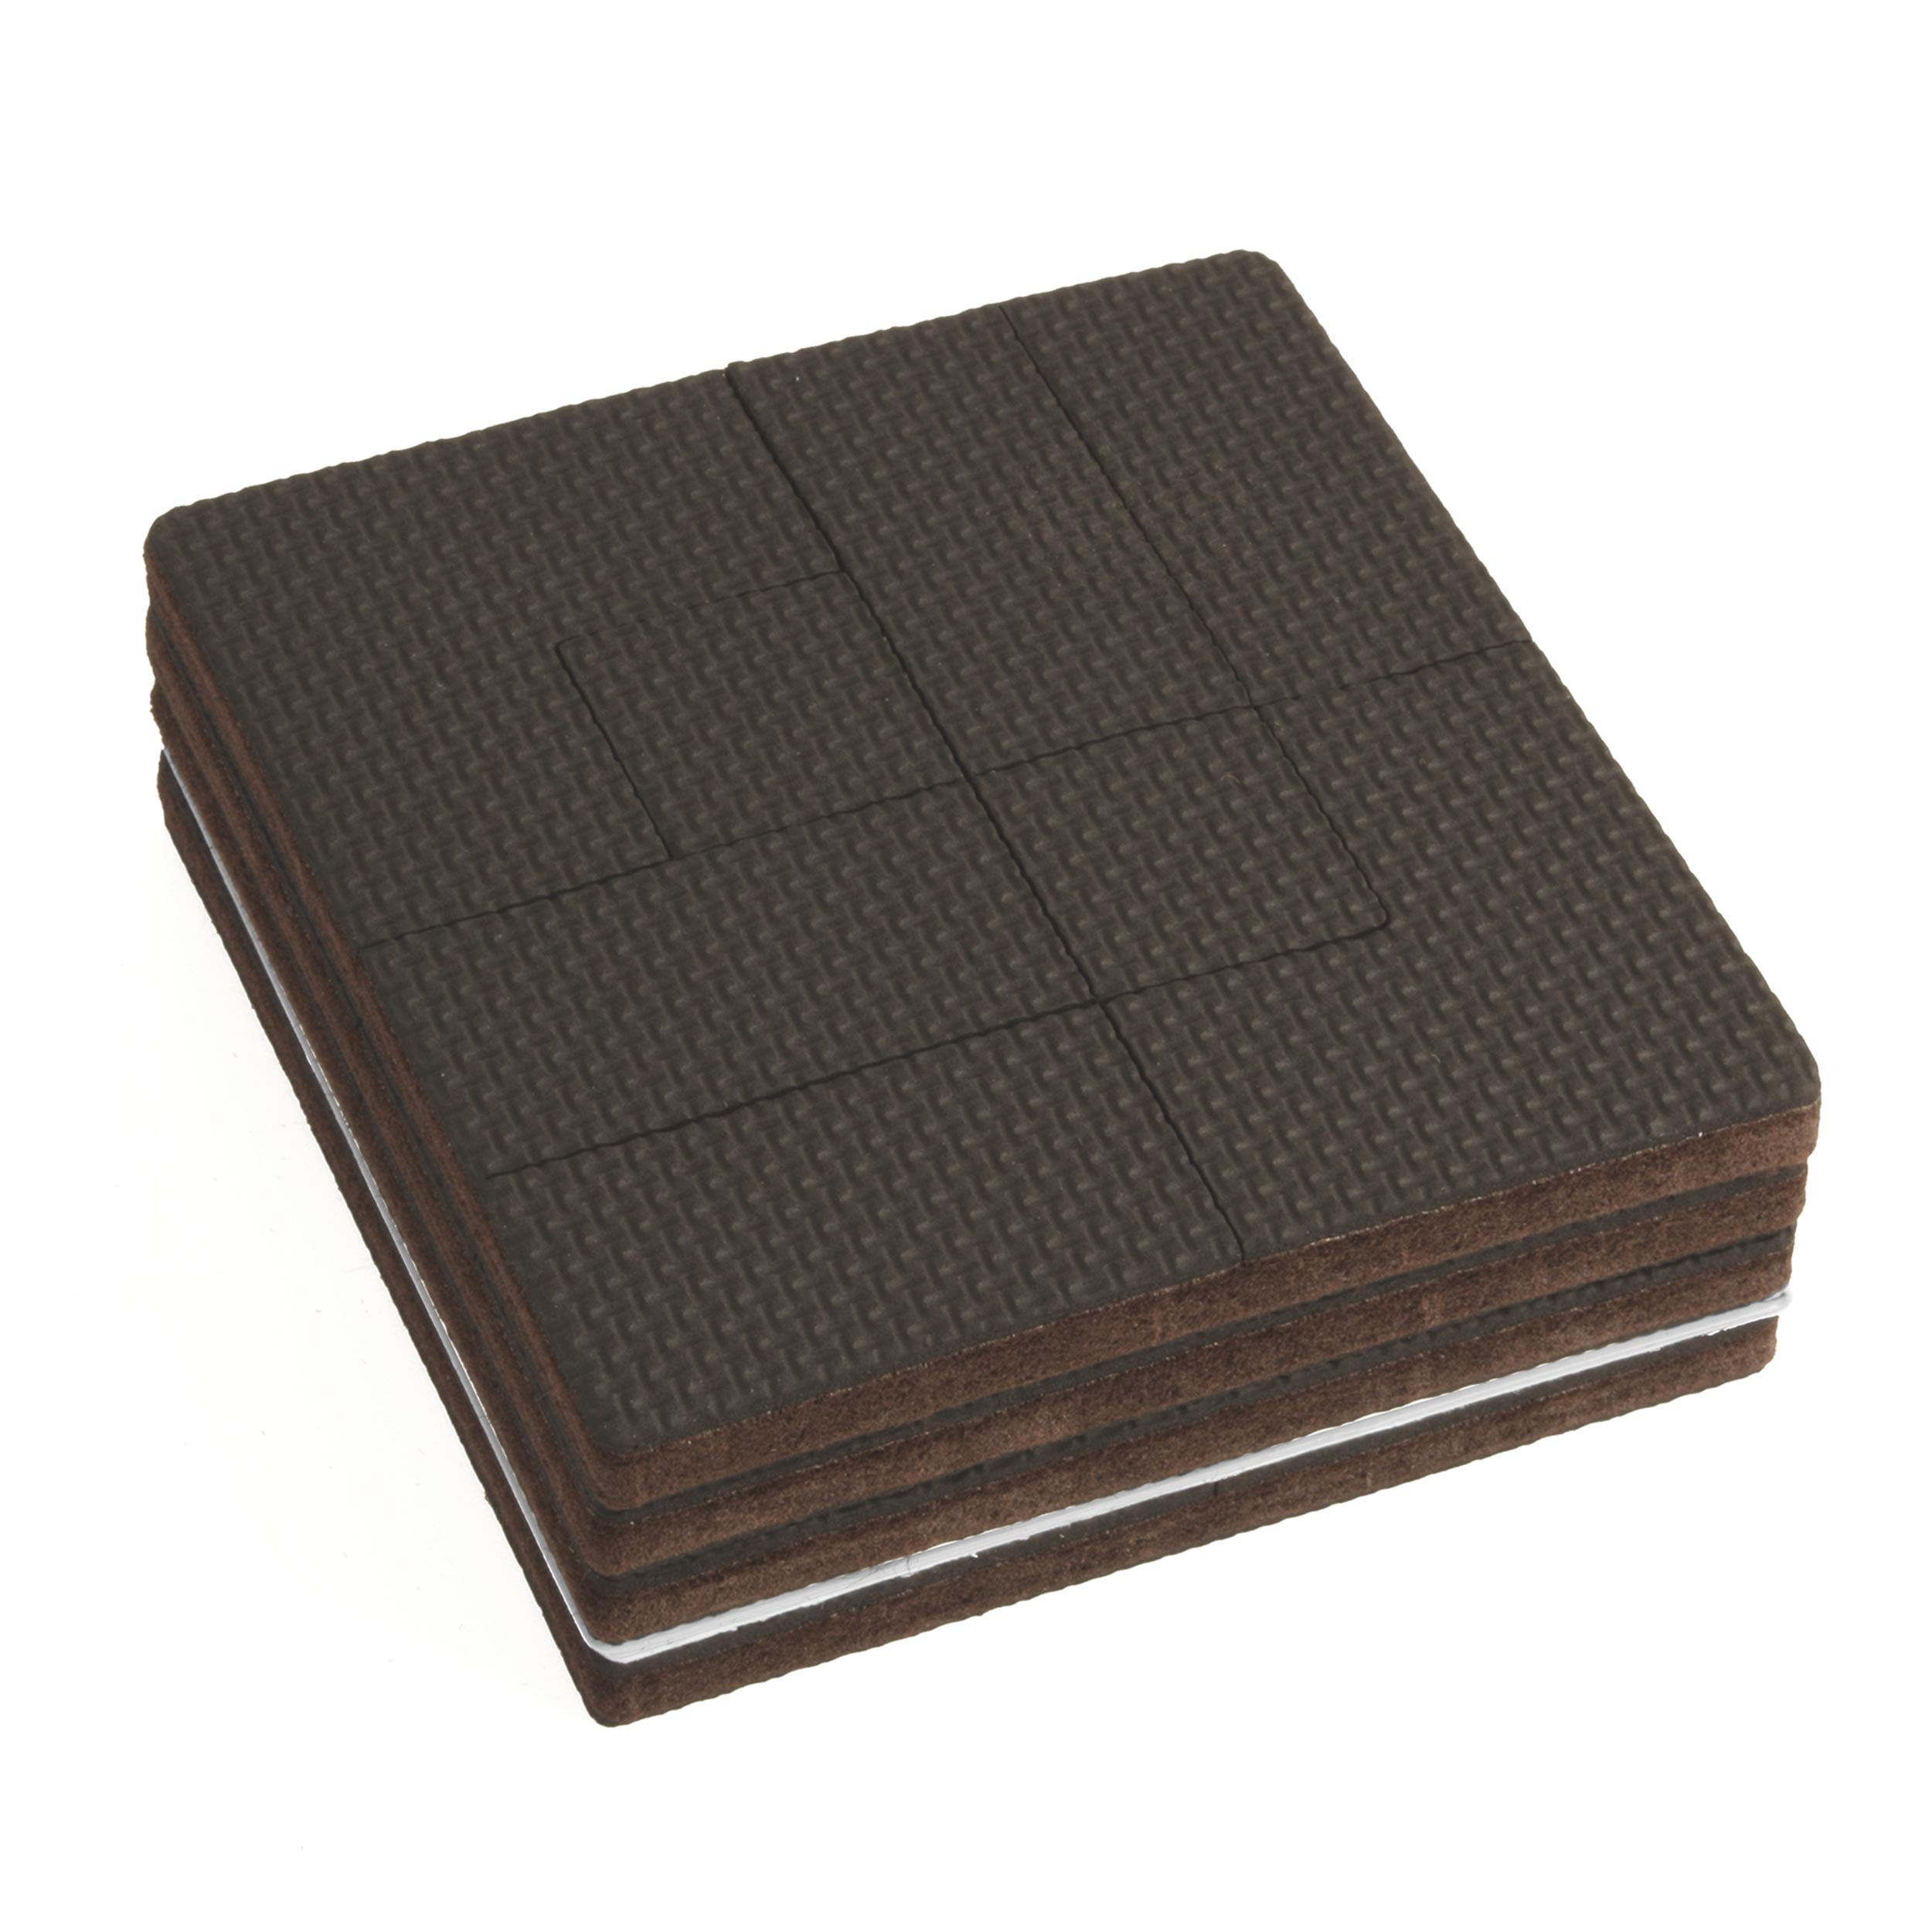 Slipstick Gorilla Pad, 2 in Square Non-Slip Furniture Gripper Pads, Cb142-16, Set of 16